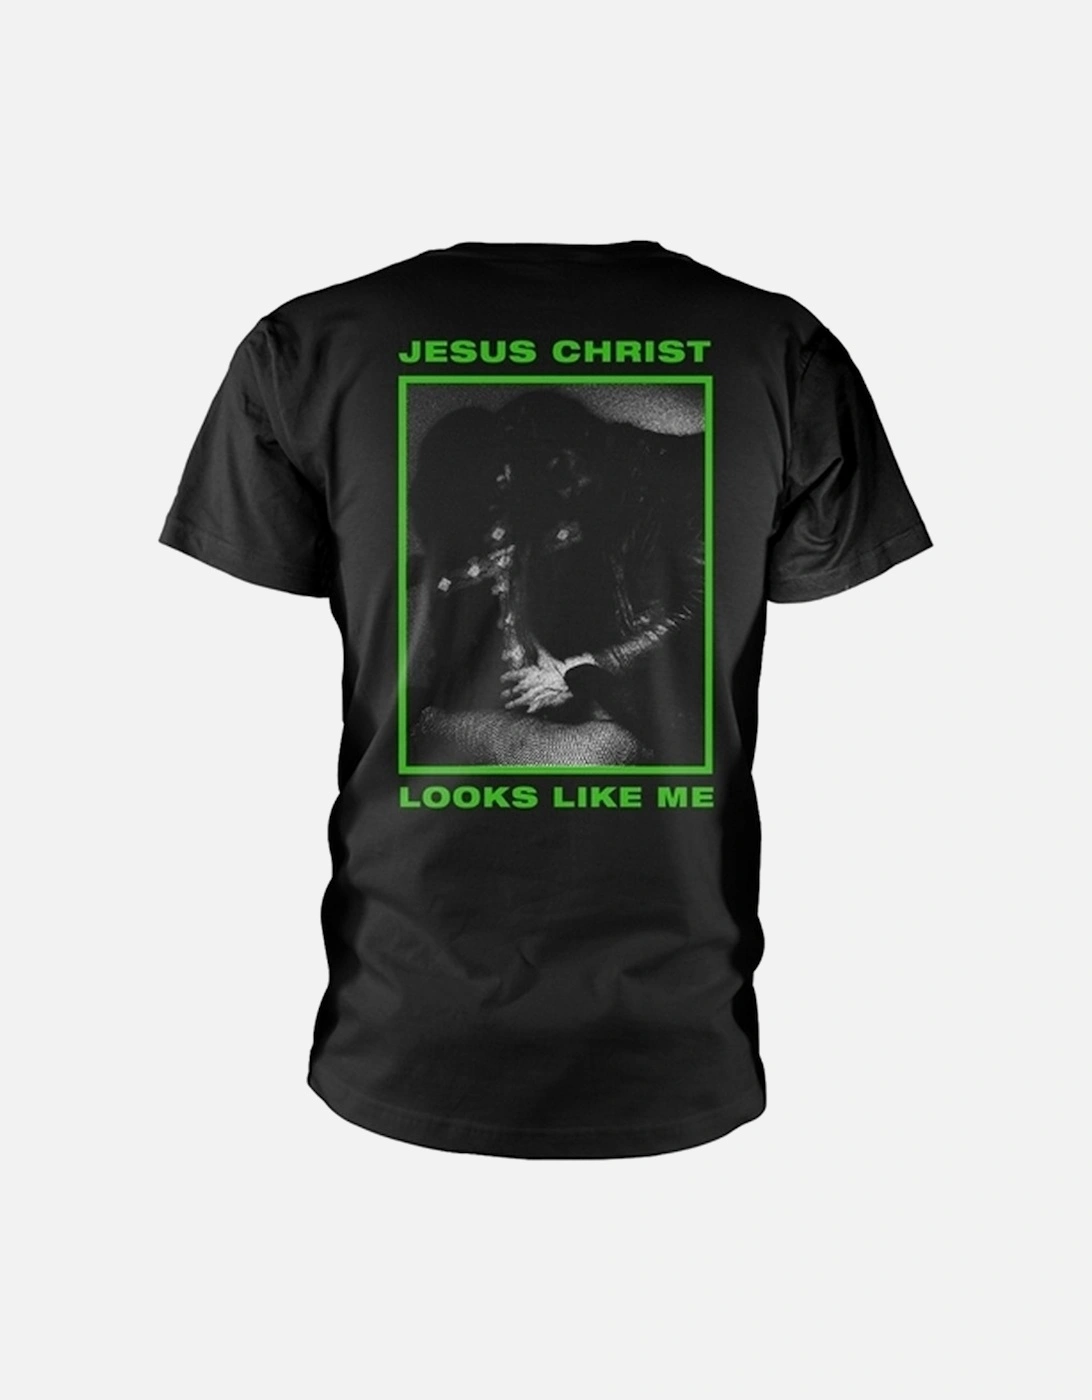 Unisex Adult Christian Woman T-Shirt